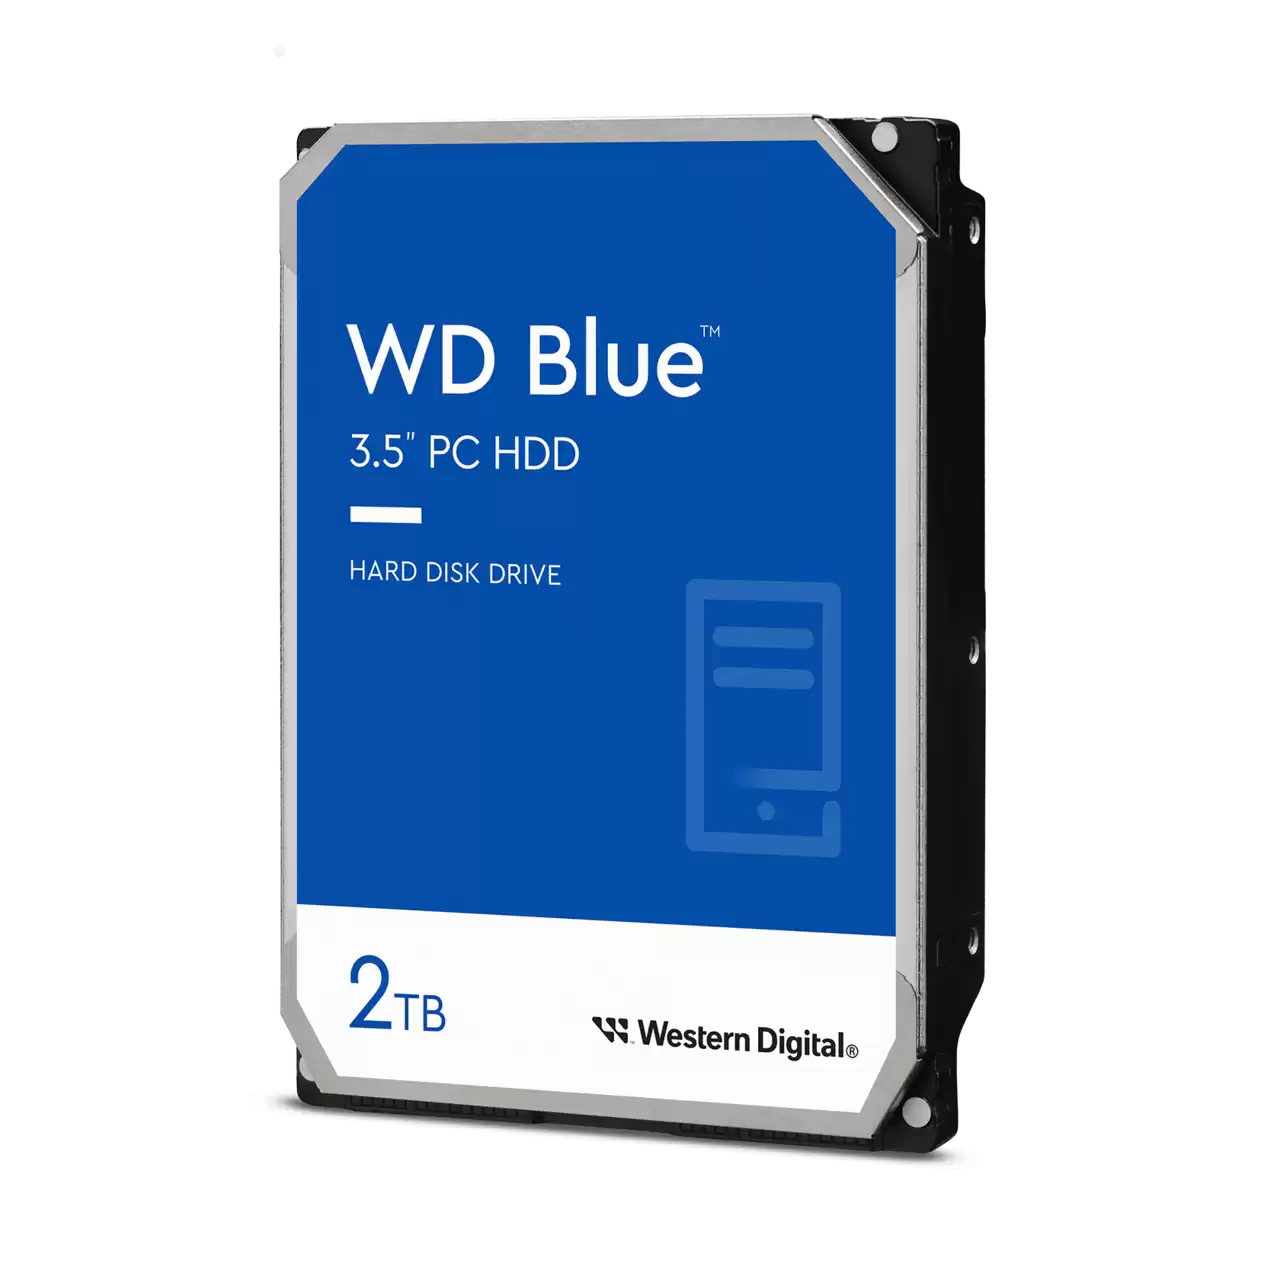 WD Blue PC Desktop Hard Drive - 2TB - 3.5 SATA - WD20EARZ